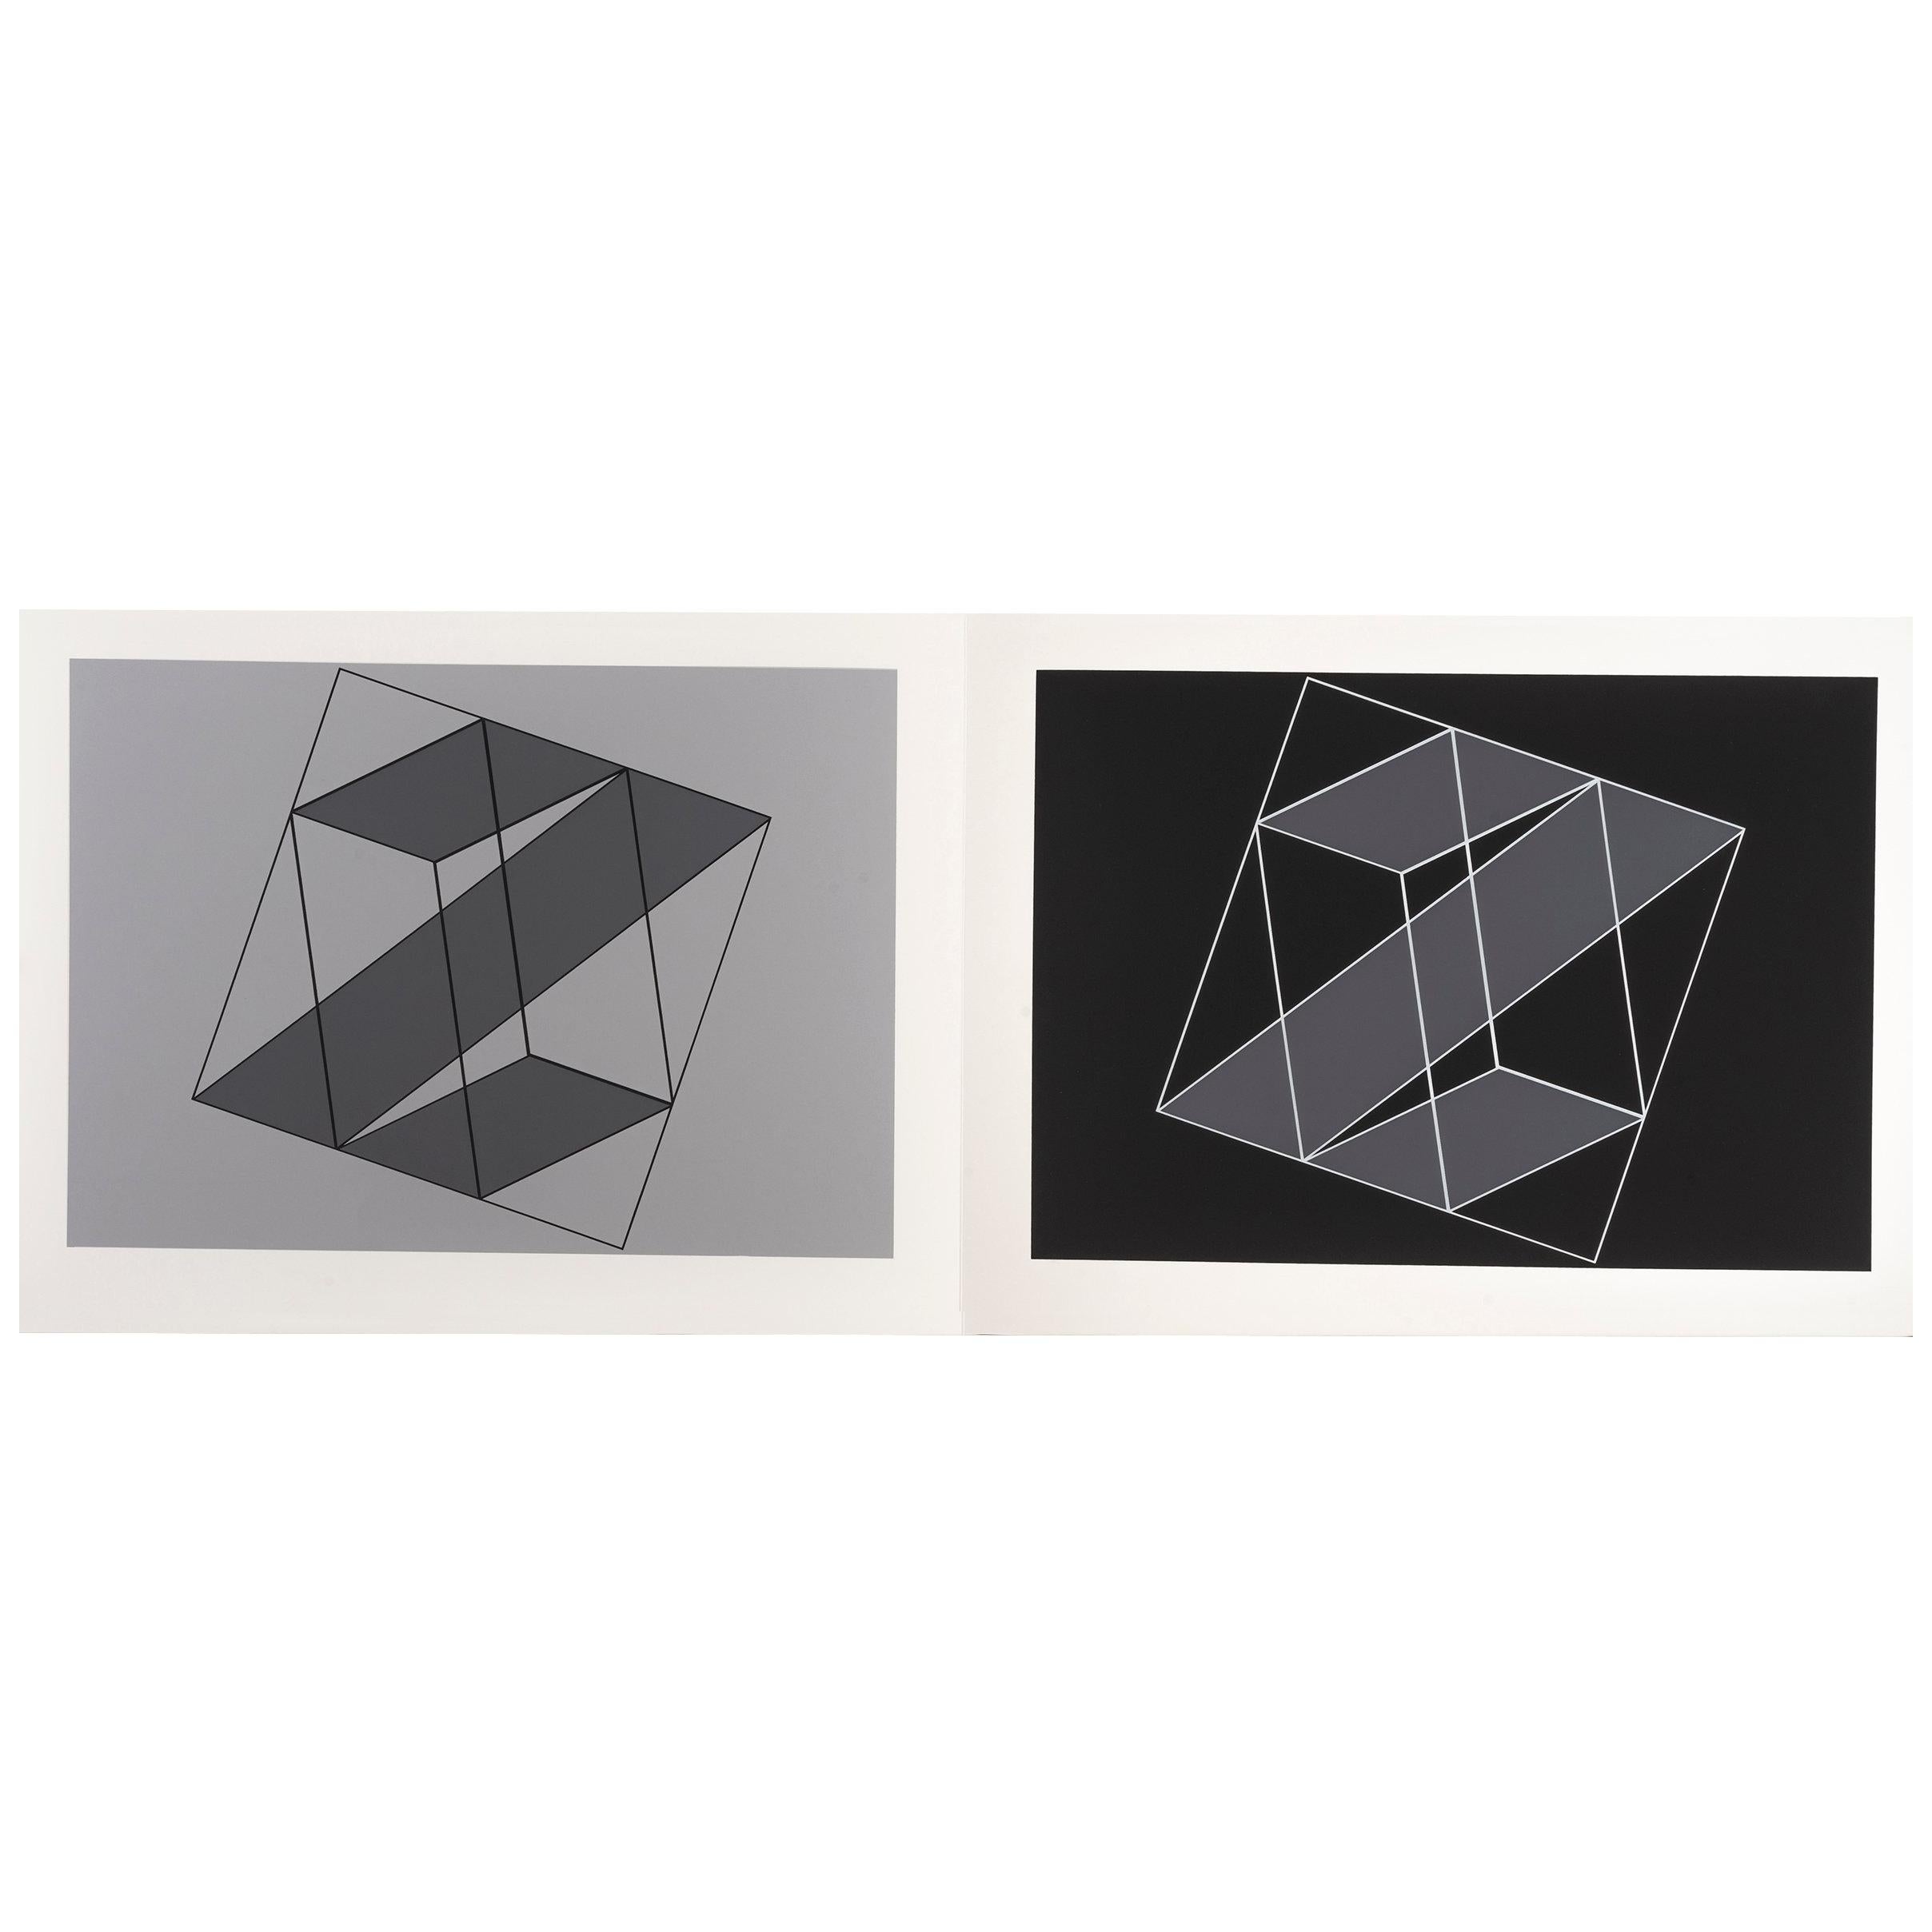 Josef Albers "Formulation : Articulation" Portfolio II, Folder 16